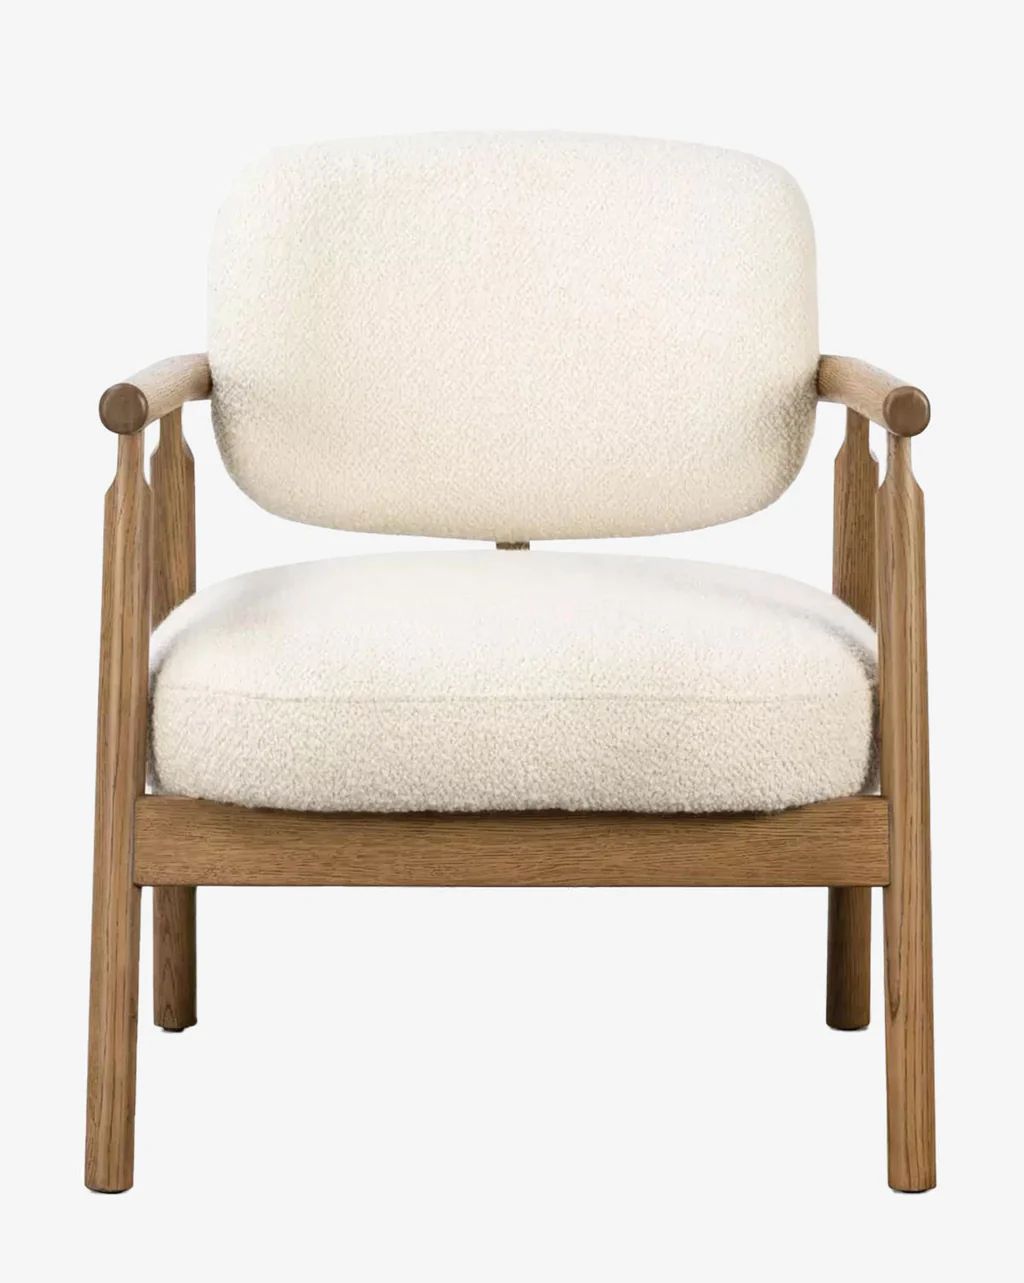 Morven Chair | McGee & Co.